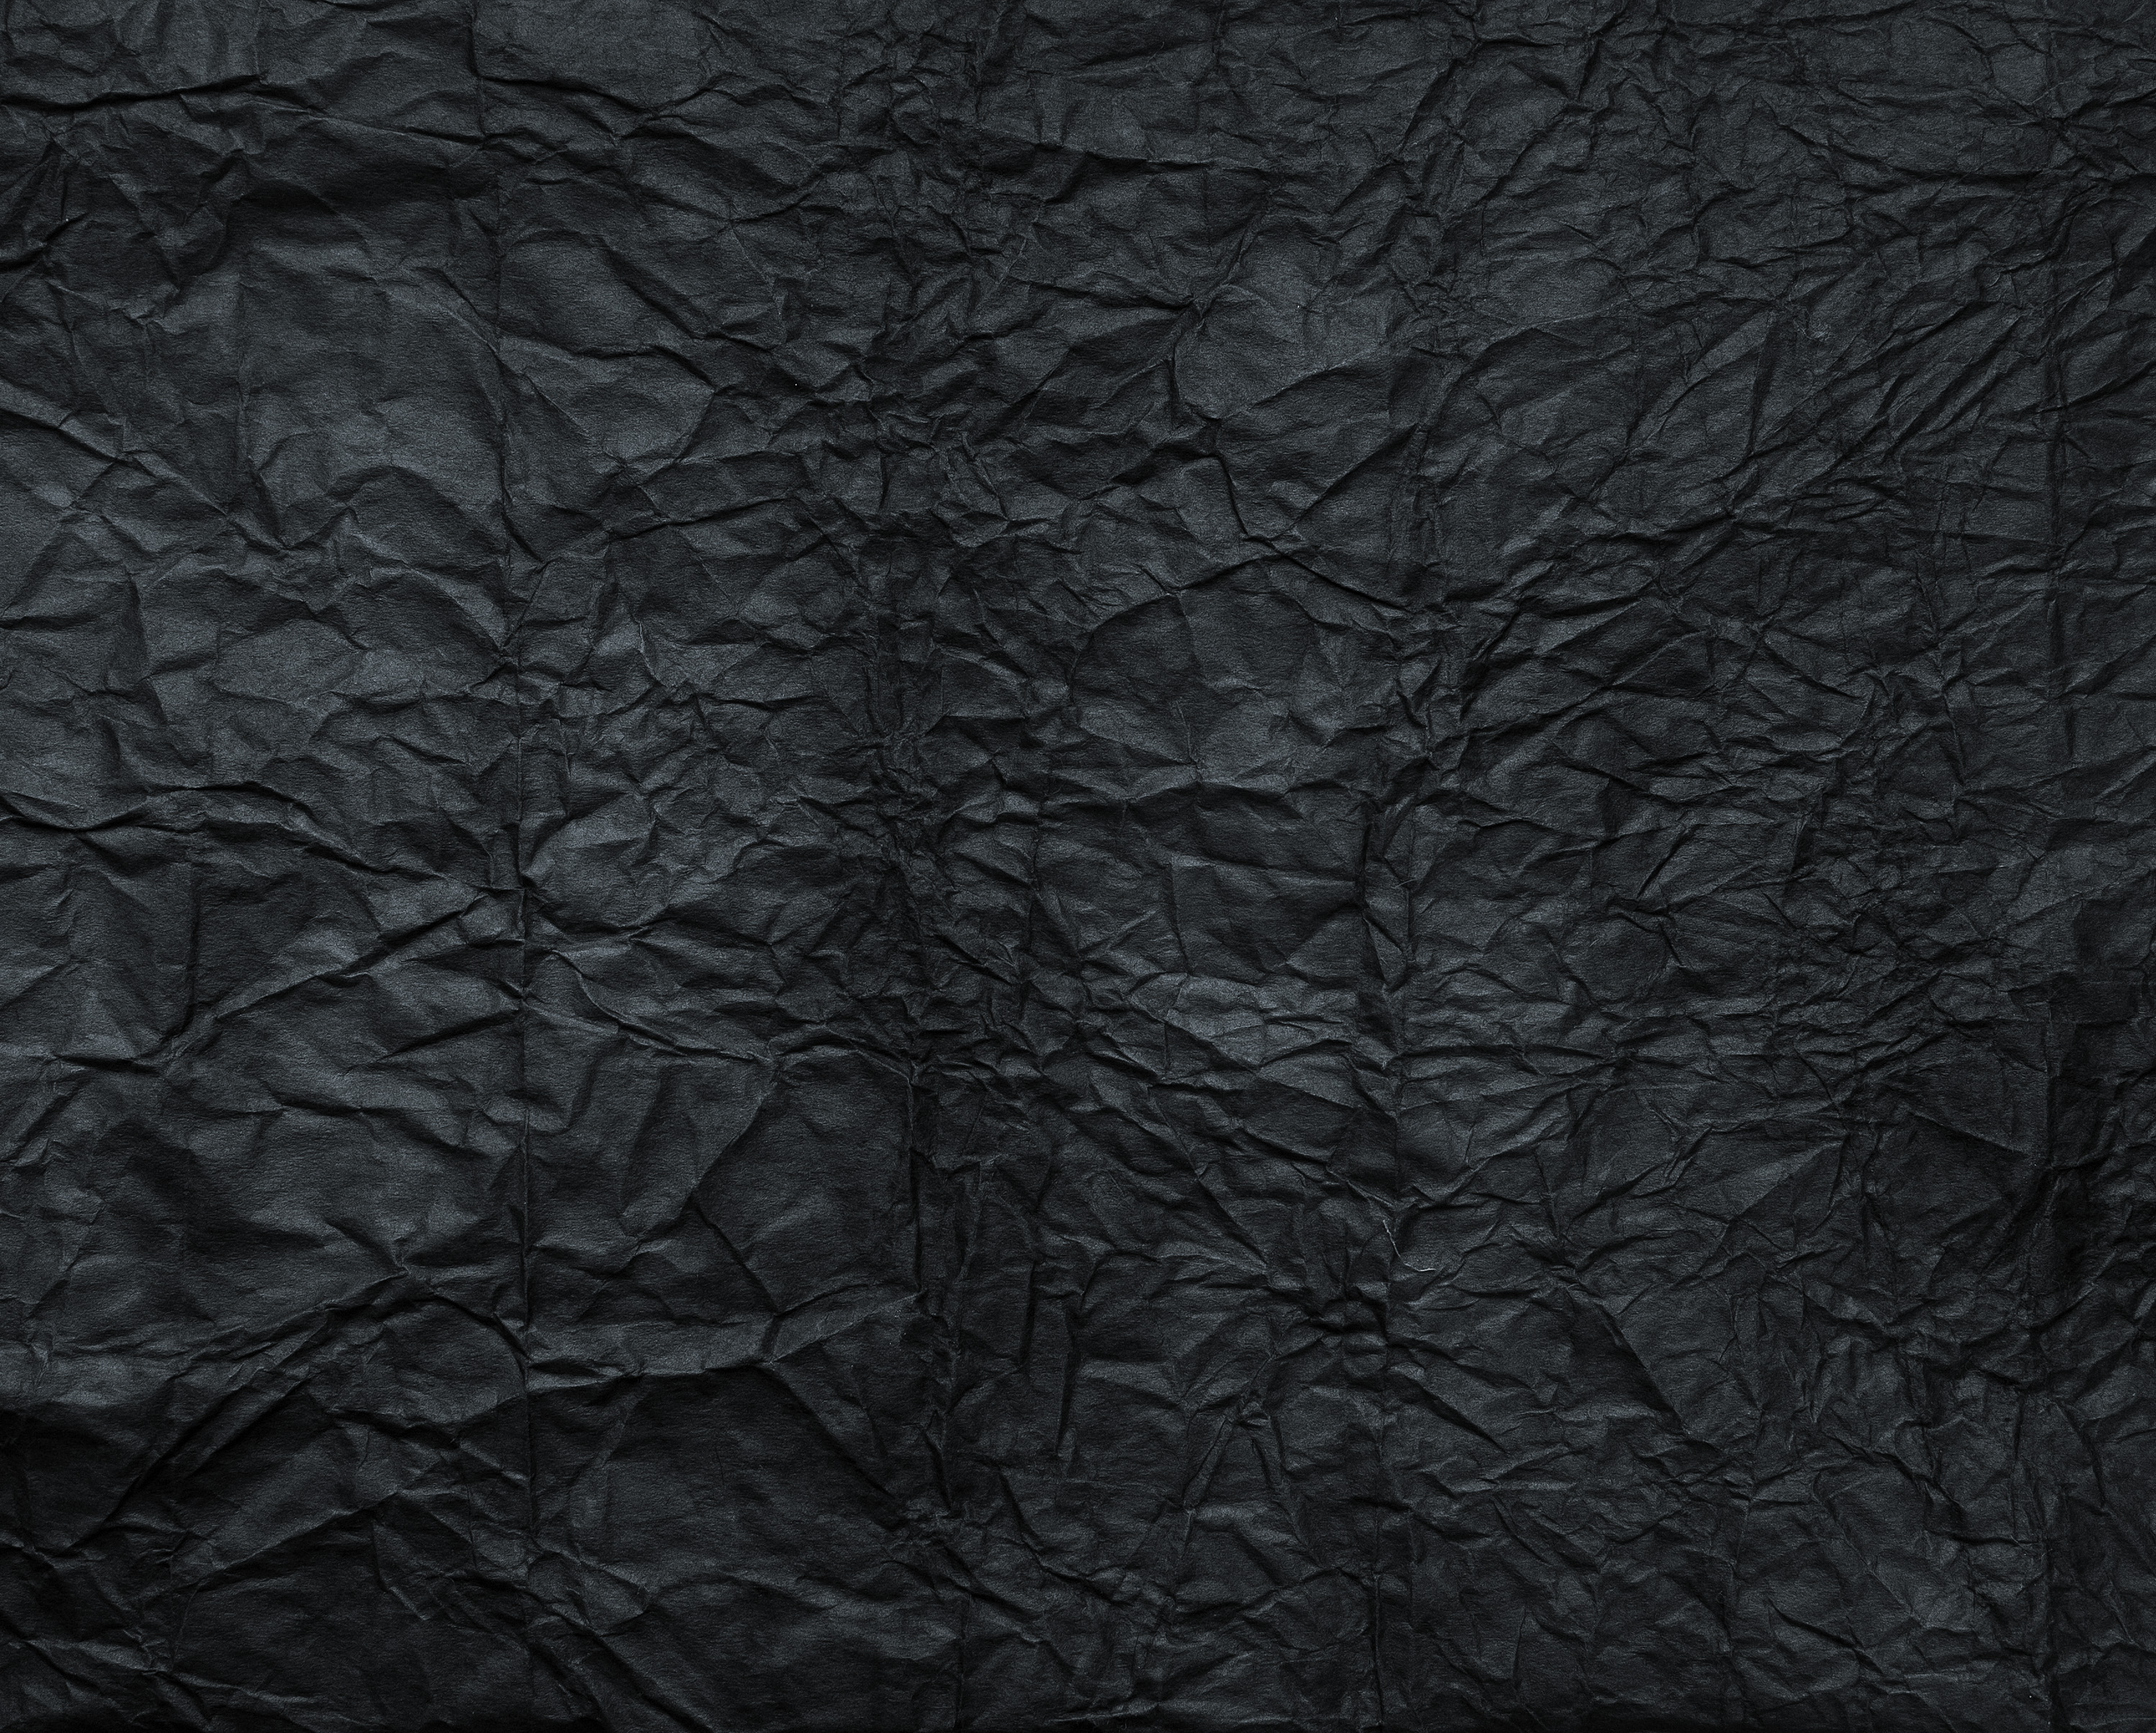 Black Stone Texture Wallpaper Image Gallery